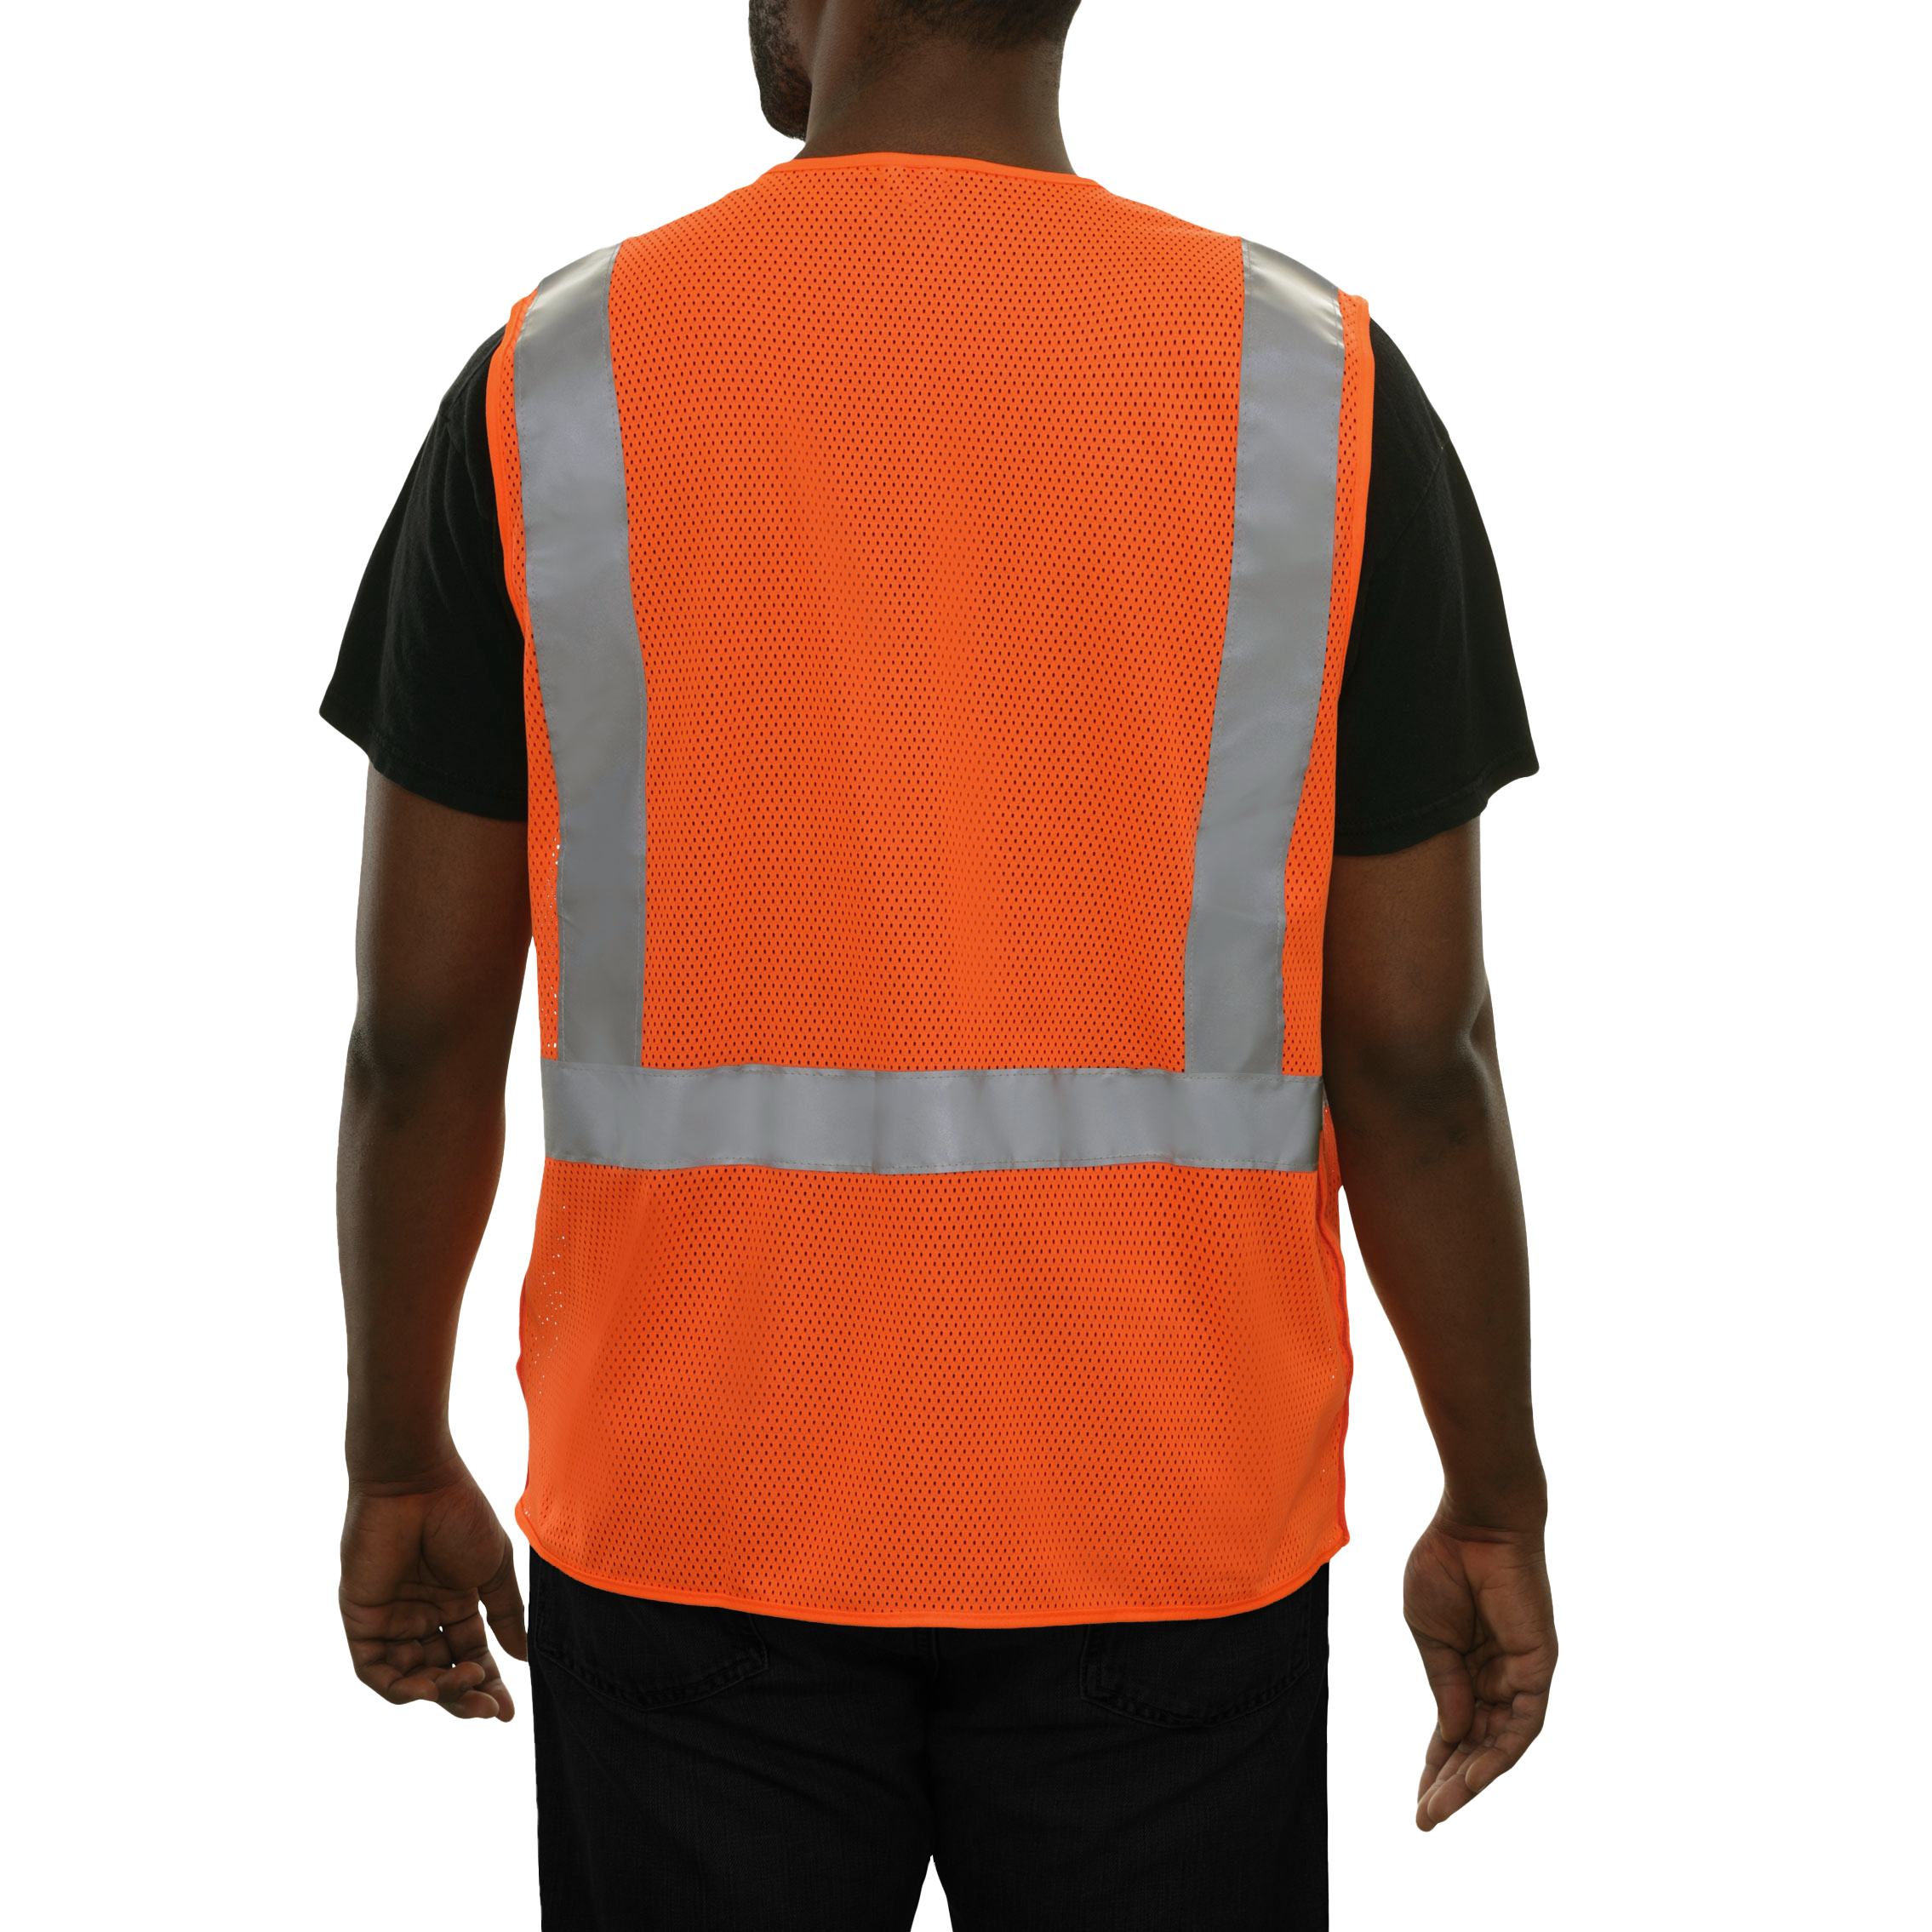 Safety Vest Hi Vis Vest Clear ID Pocket 5pt Breakaway Orange Zip Mesh